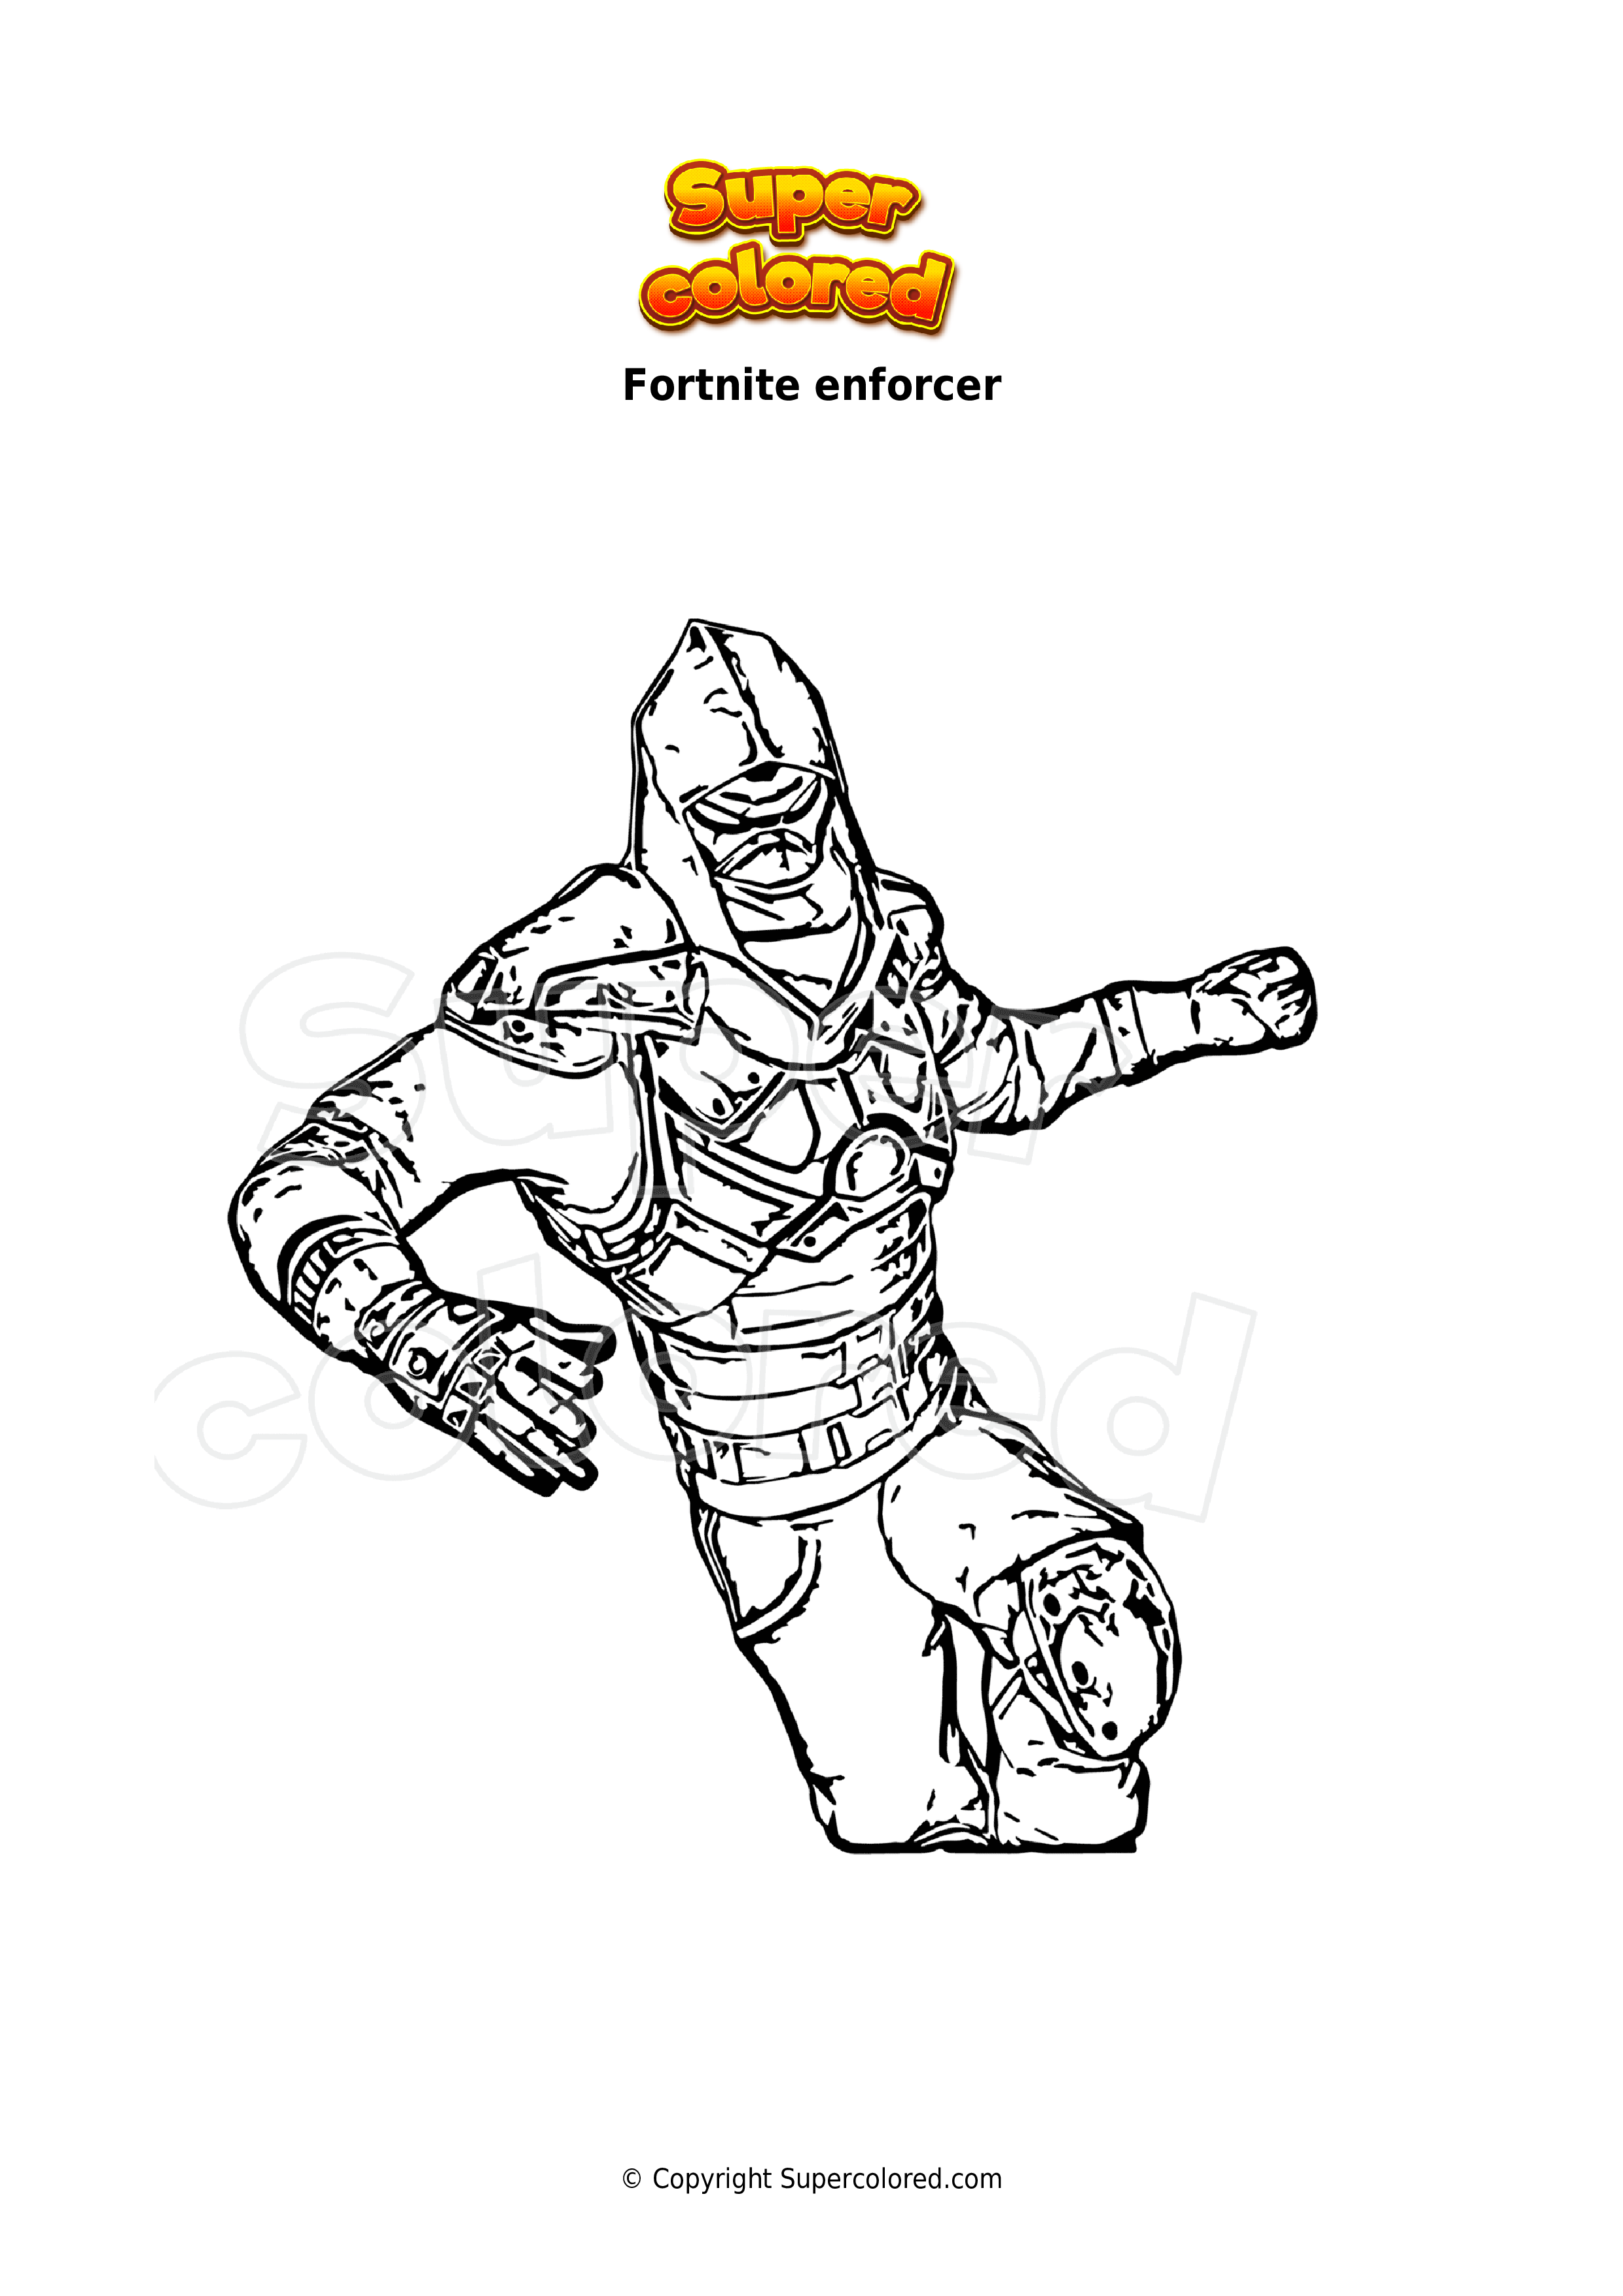 Coloriage Fortnite enforcer - Supercolored.com